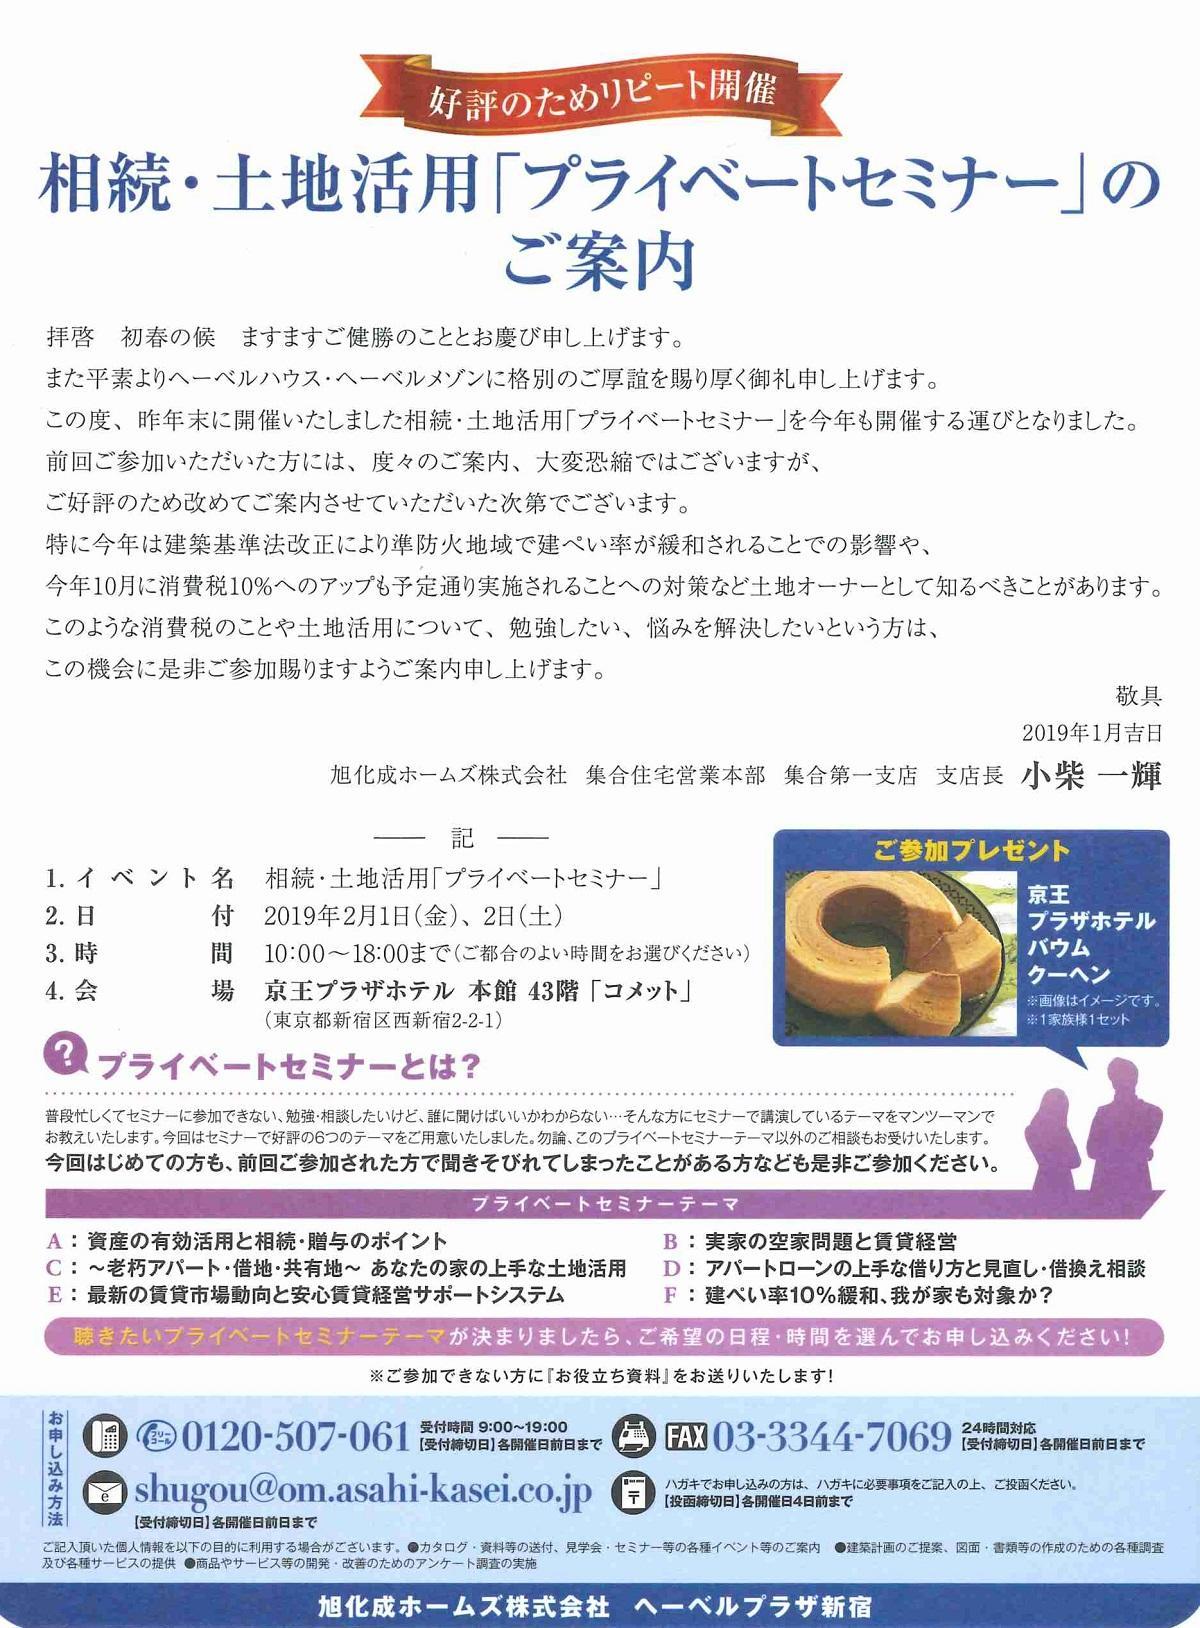 https://www.asahi-kasei.co.jp/maison/hebelplaza/blog/18/shinjuku/item/2019/190128-2.jpg